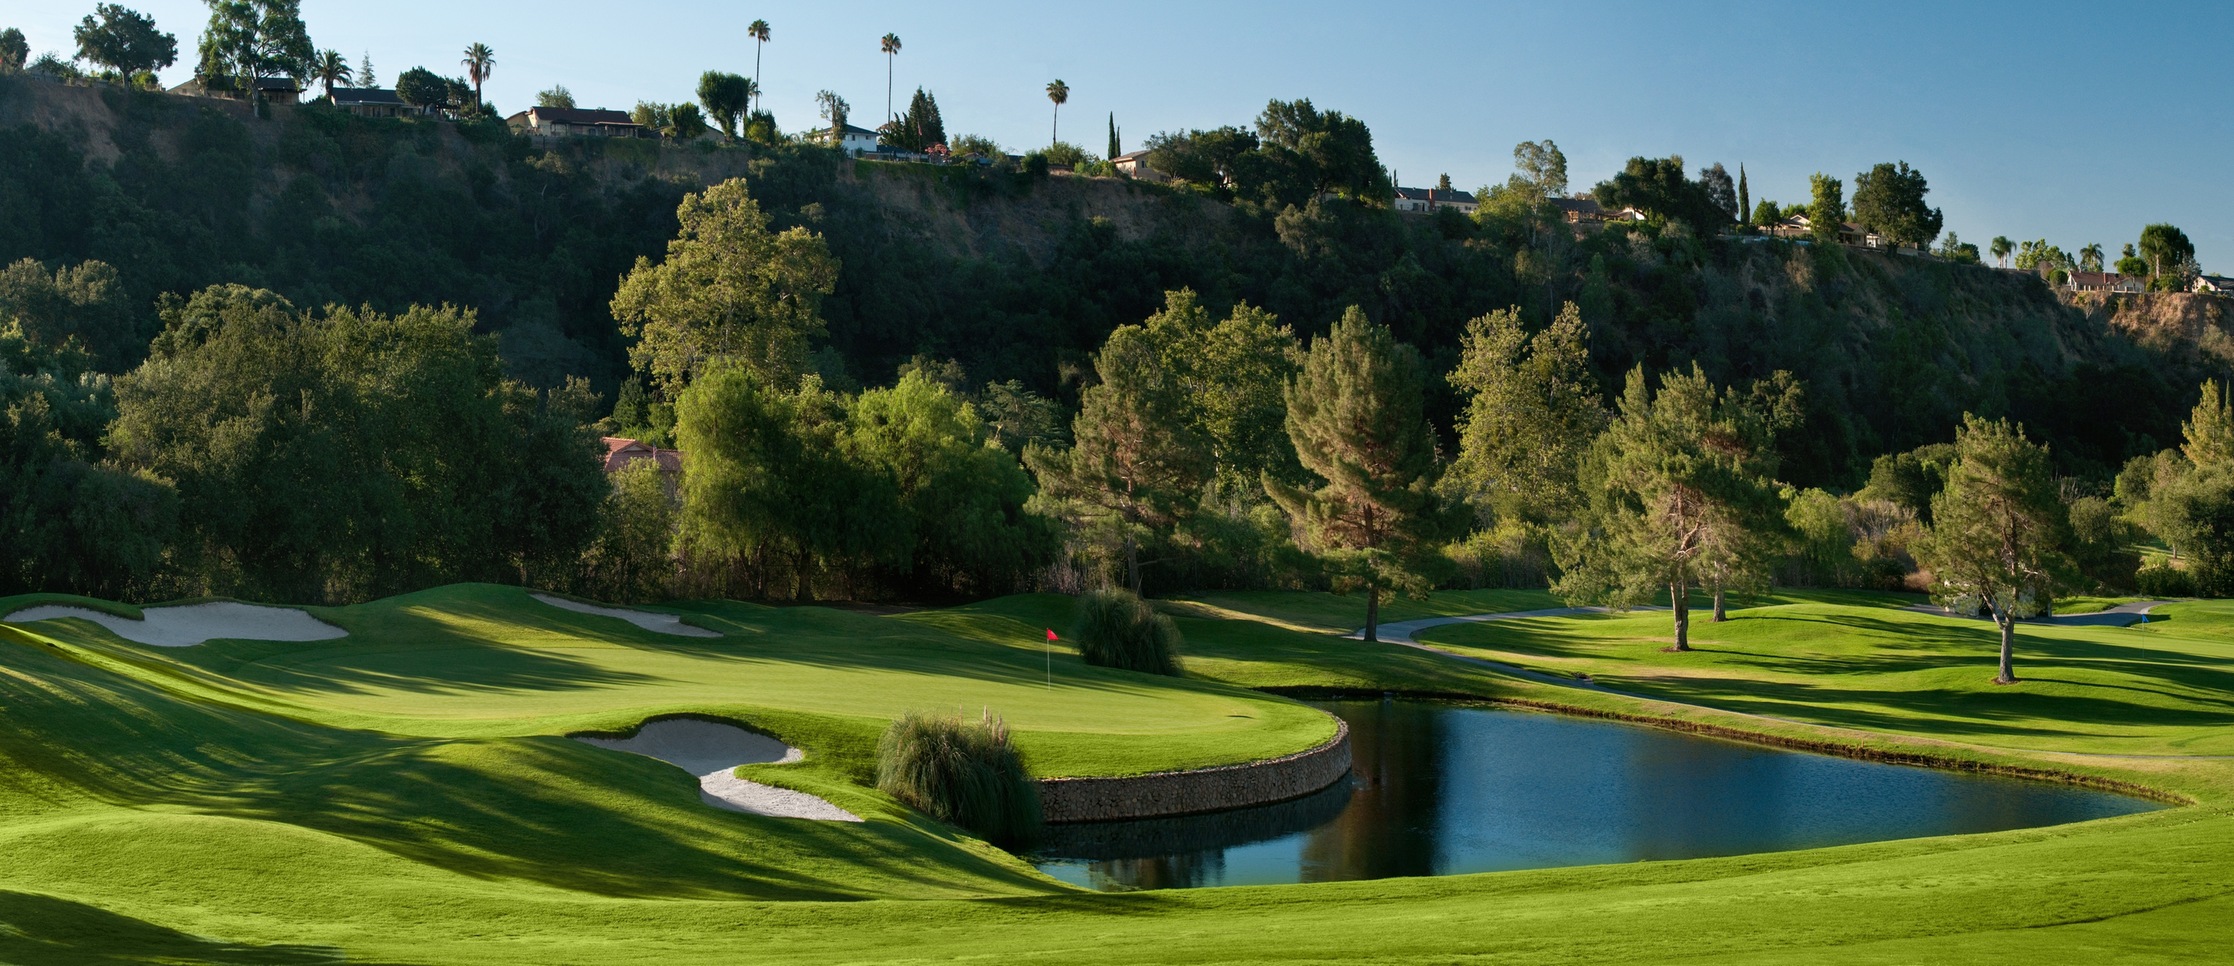 San Dimas Canyon Golf Course is a public, 18 hole course nestled in the foothills of San Dimas, California.